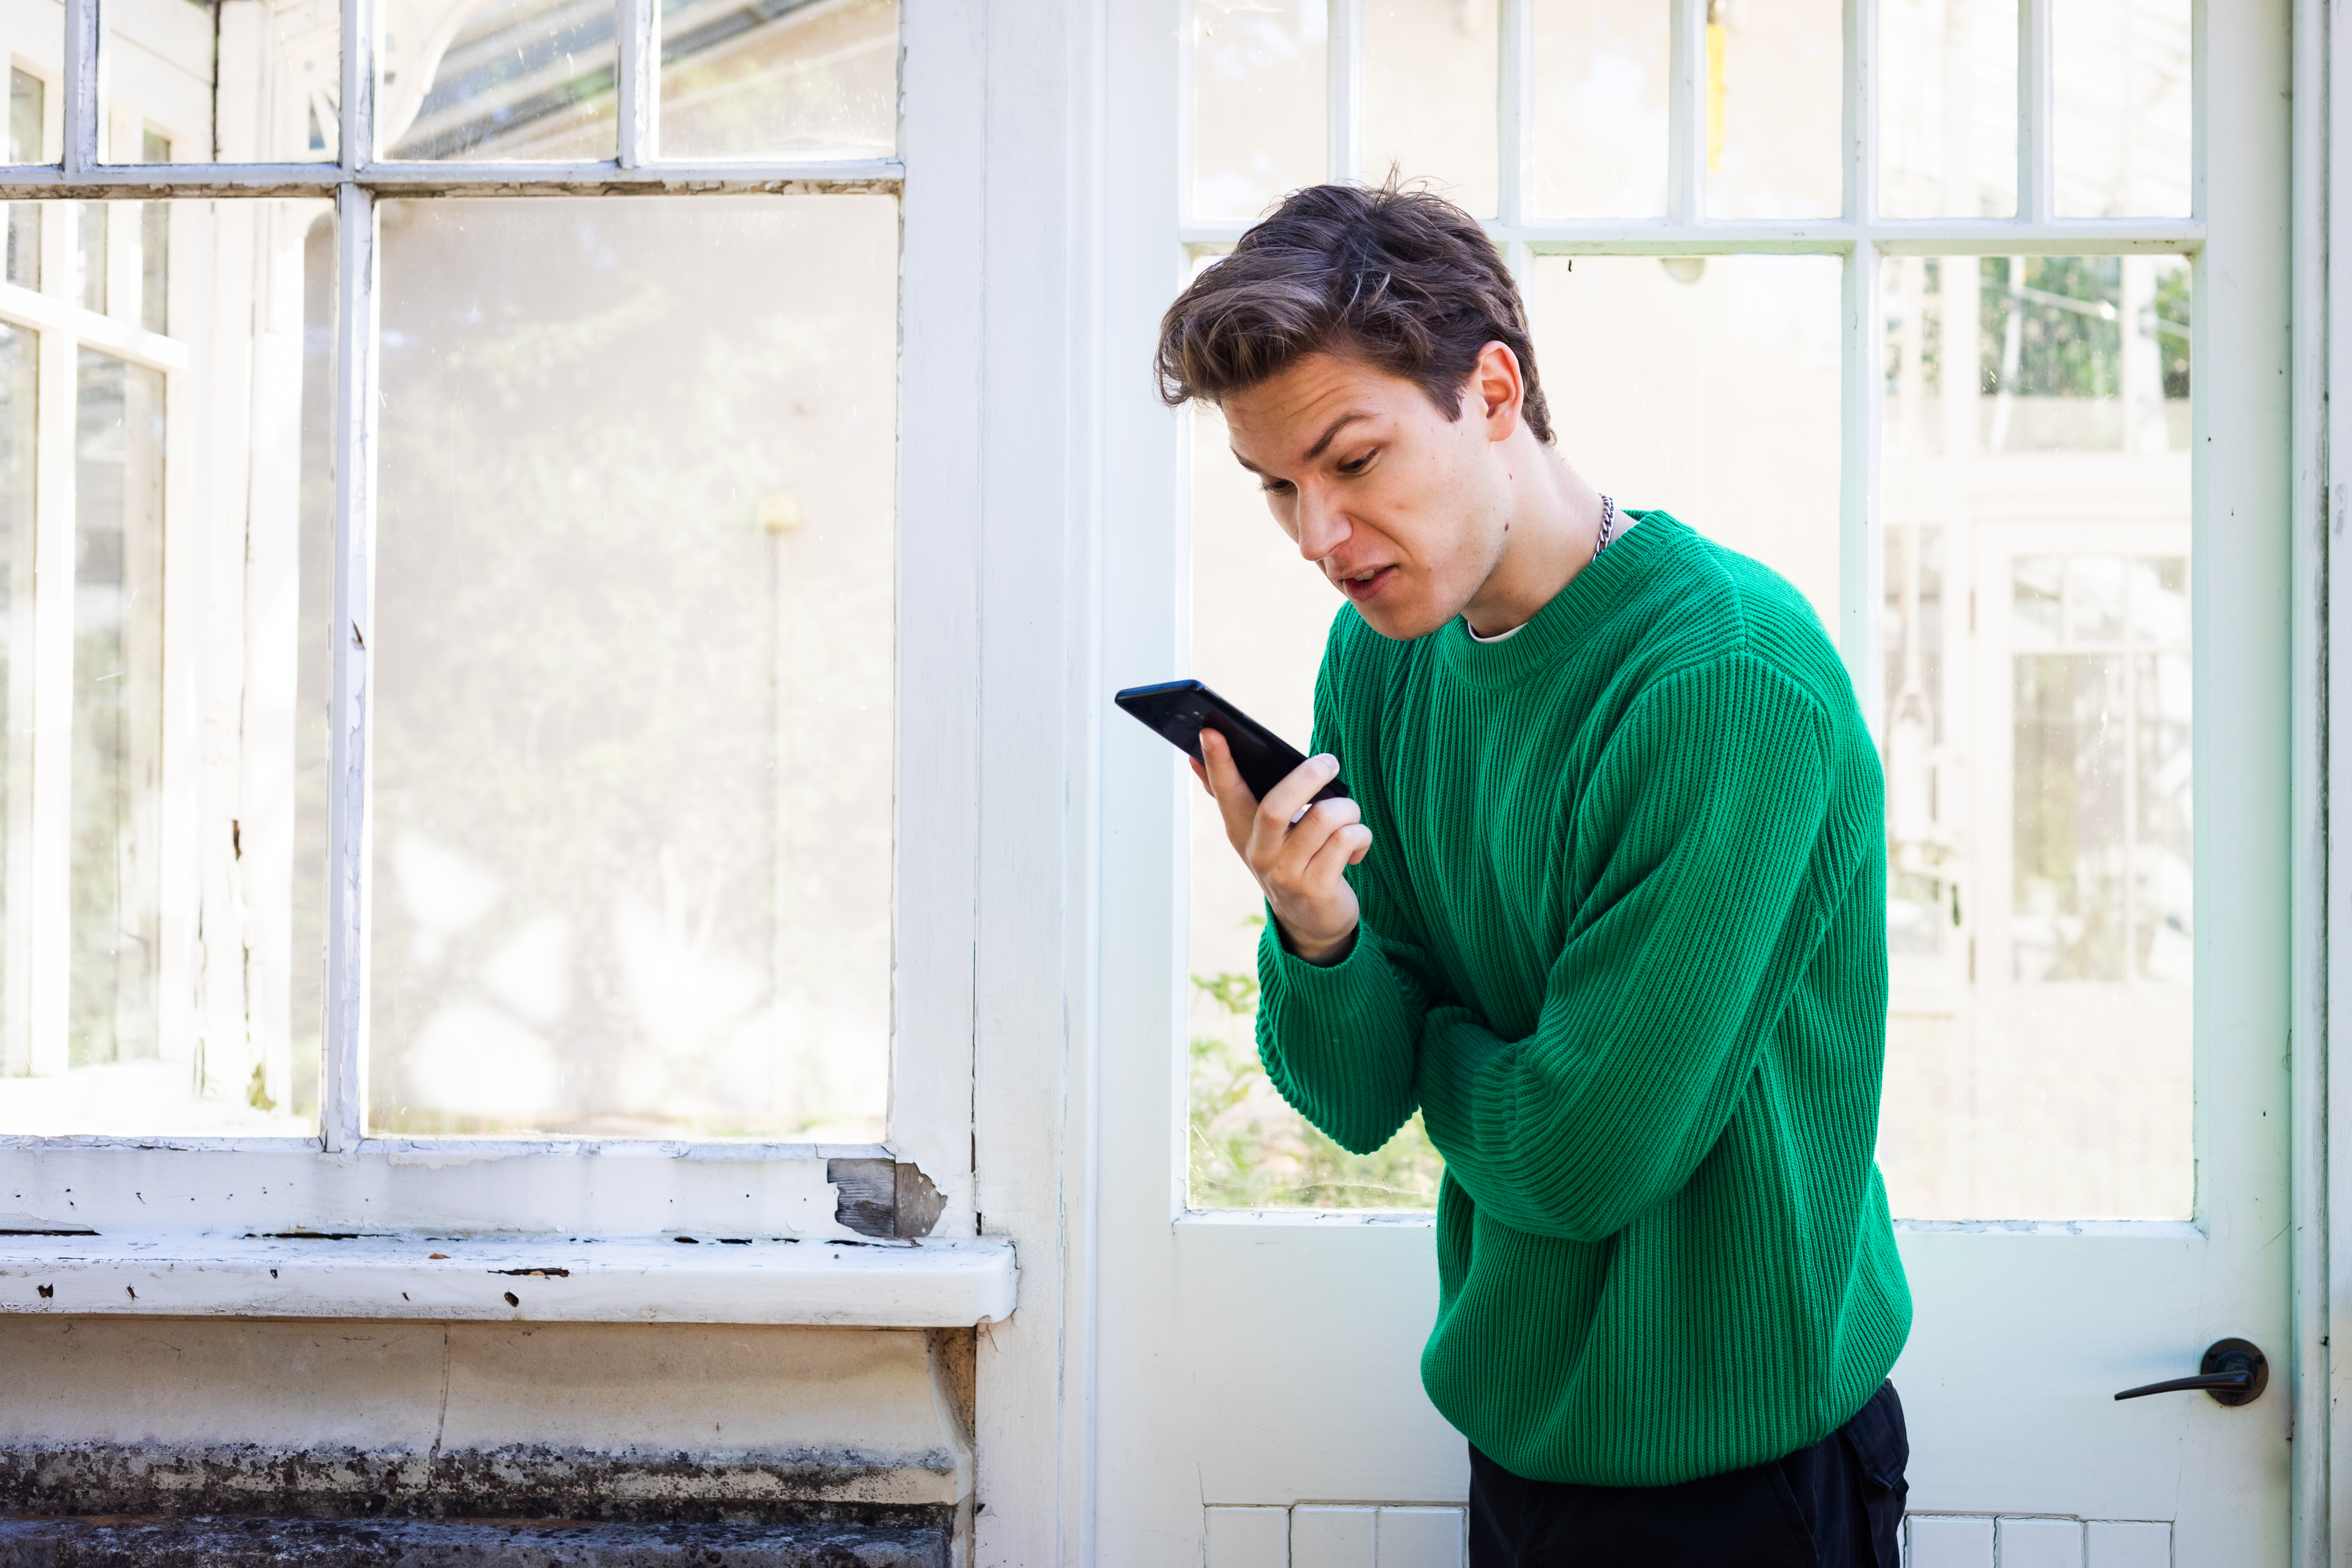 Homme en colère regardant son téléphone | Source : Shutterstock